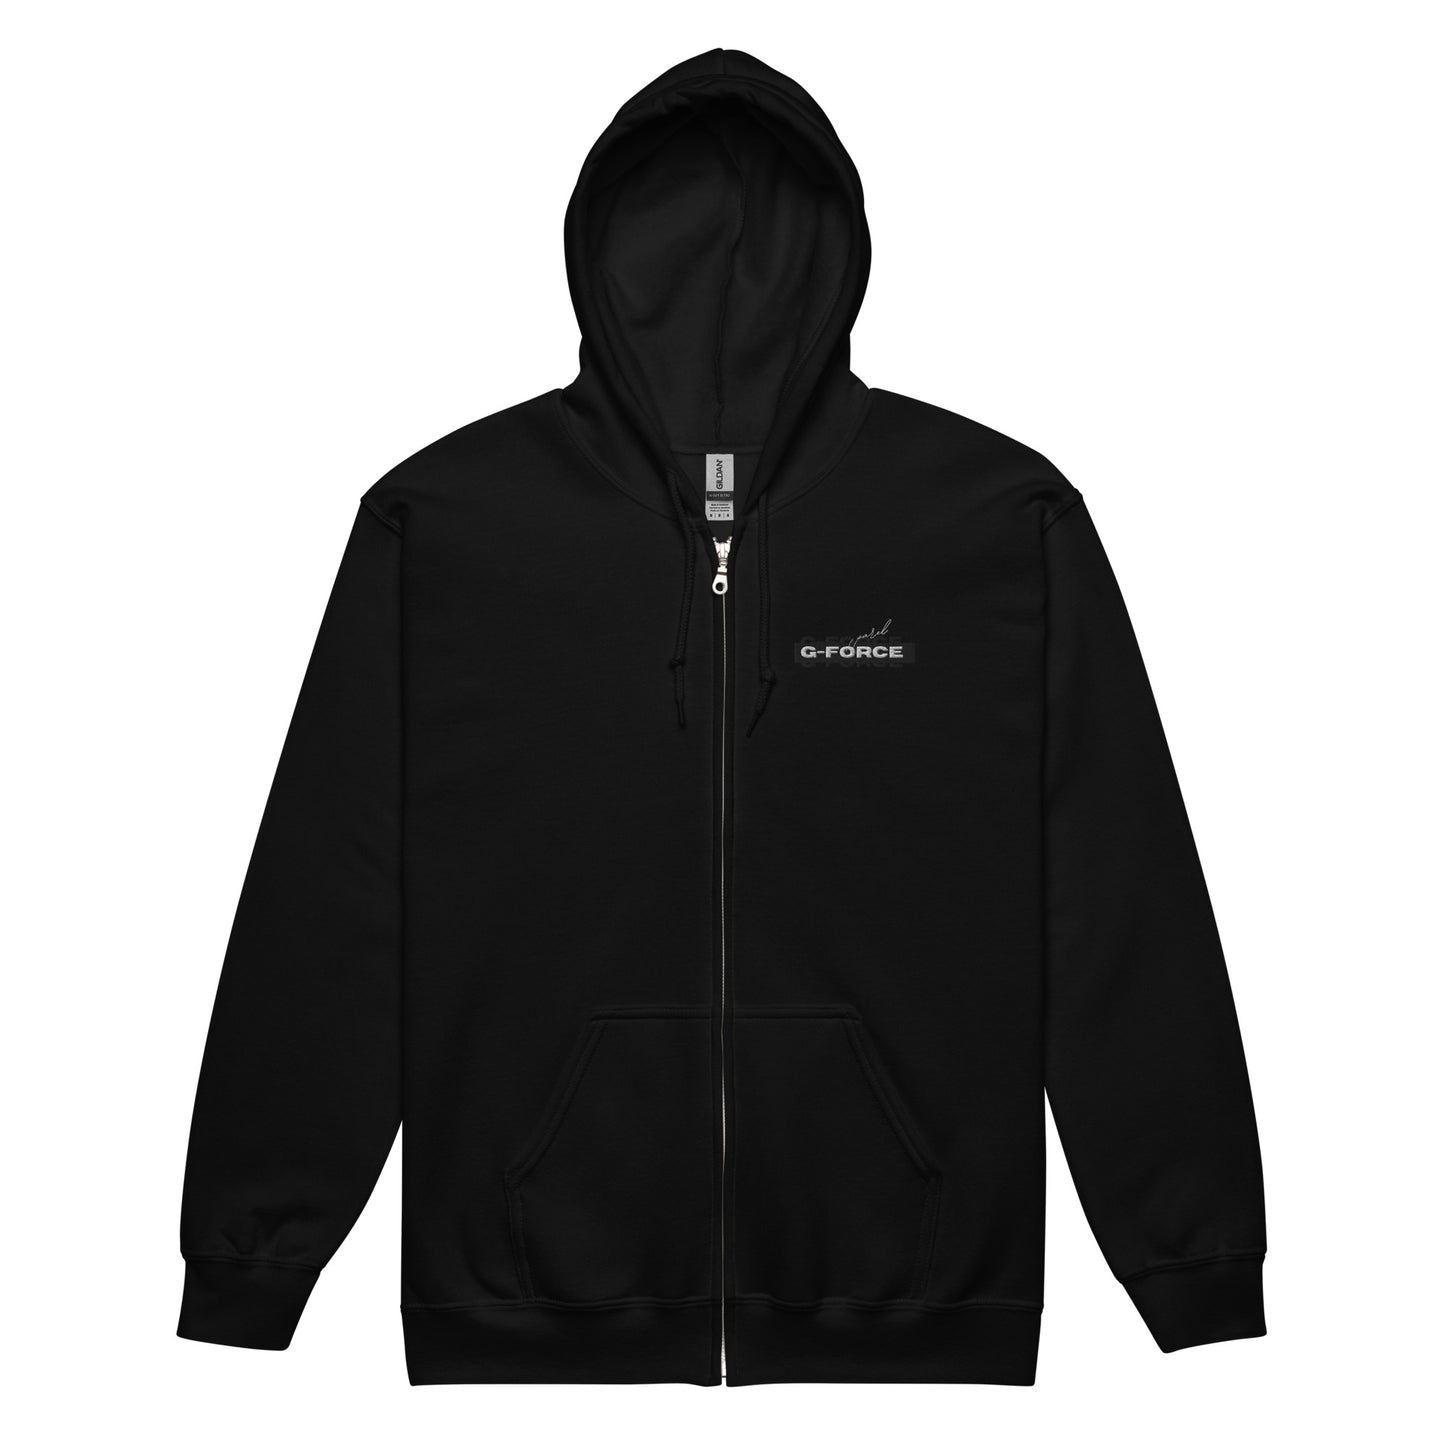 G-FORCE Signature zip hoodie